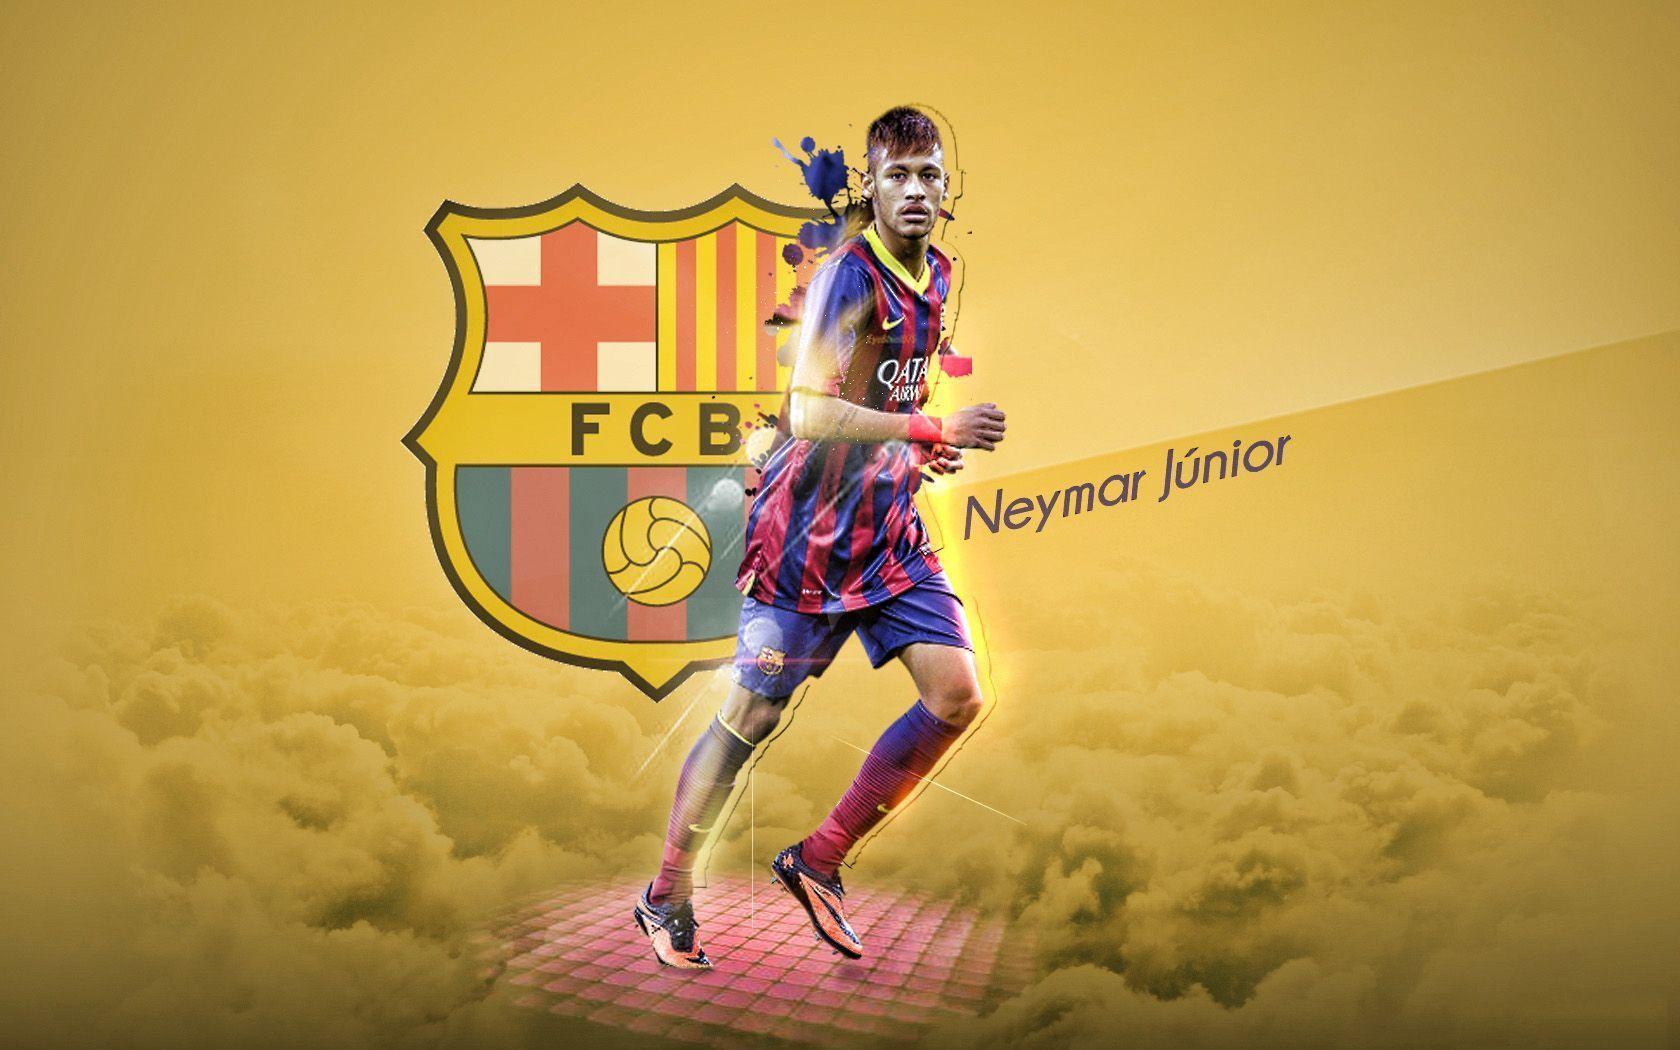 Neymar And Messi Wallpaper 2015 · Neymar Wallpaper. Best Desktop